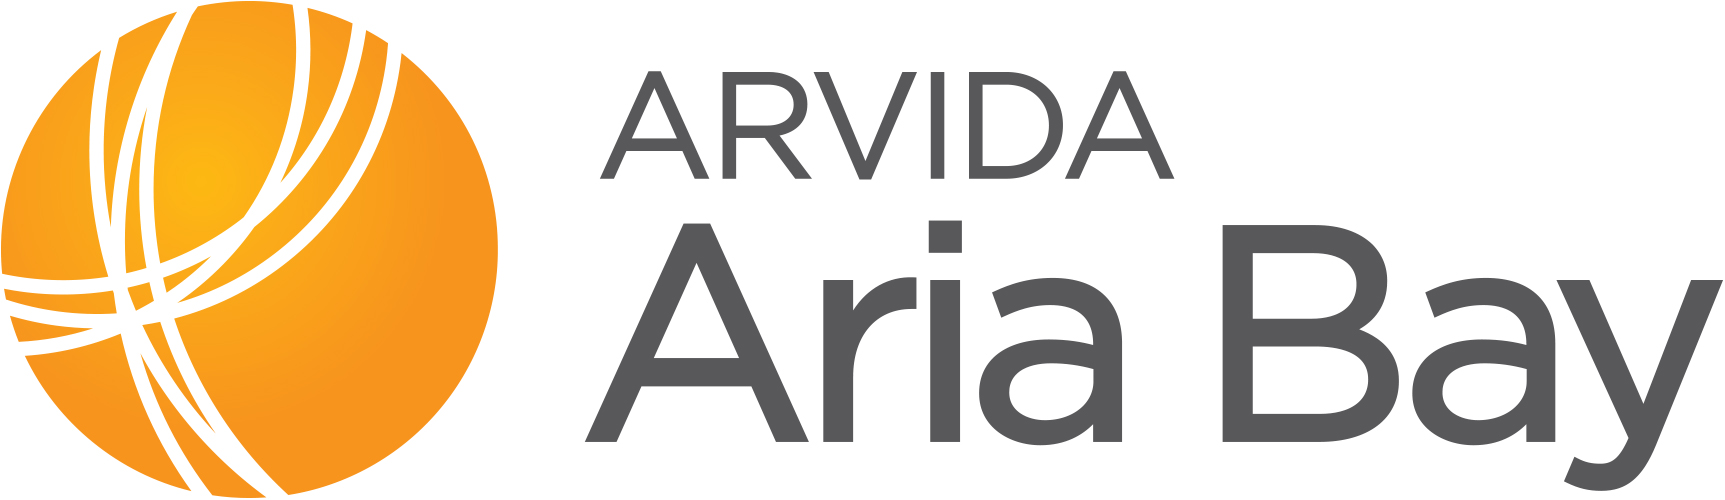 Aria Bay | Arvida logo